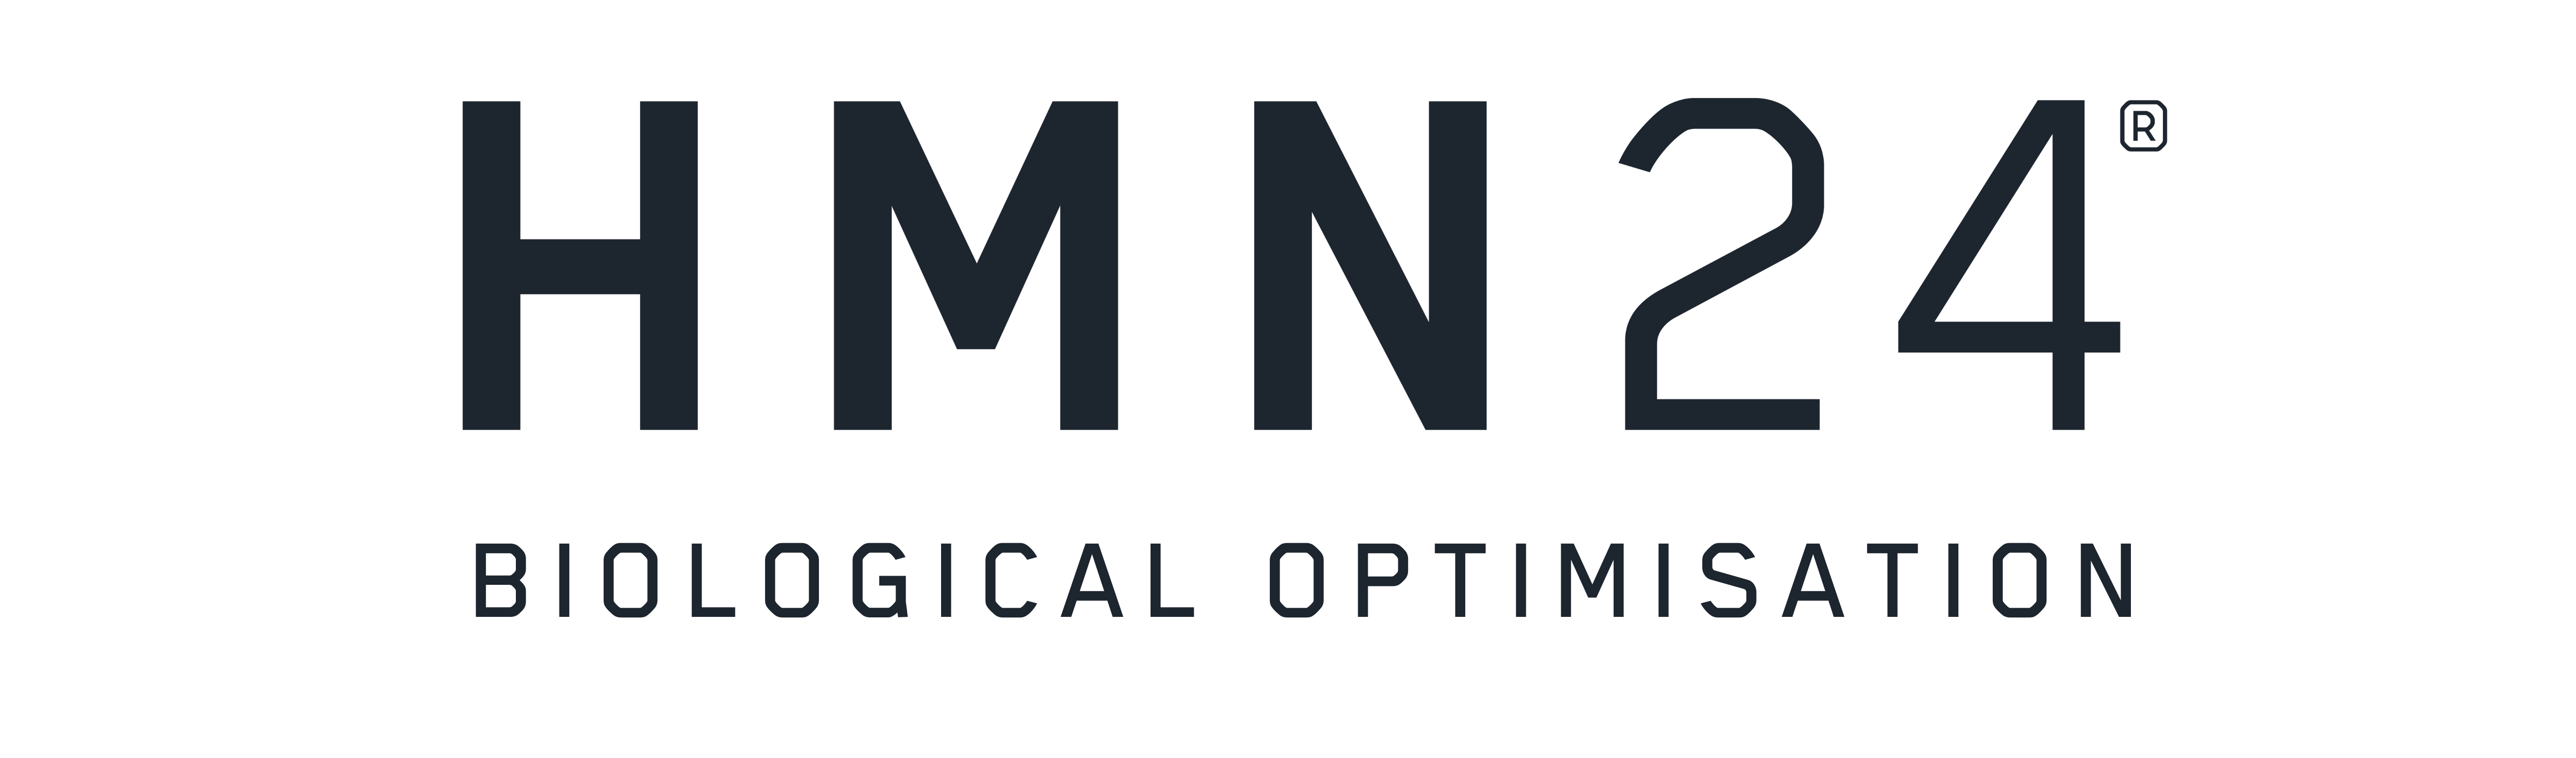 hmn24-logo-1.png